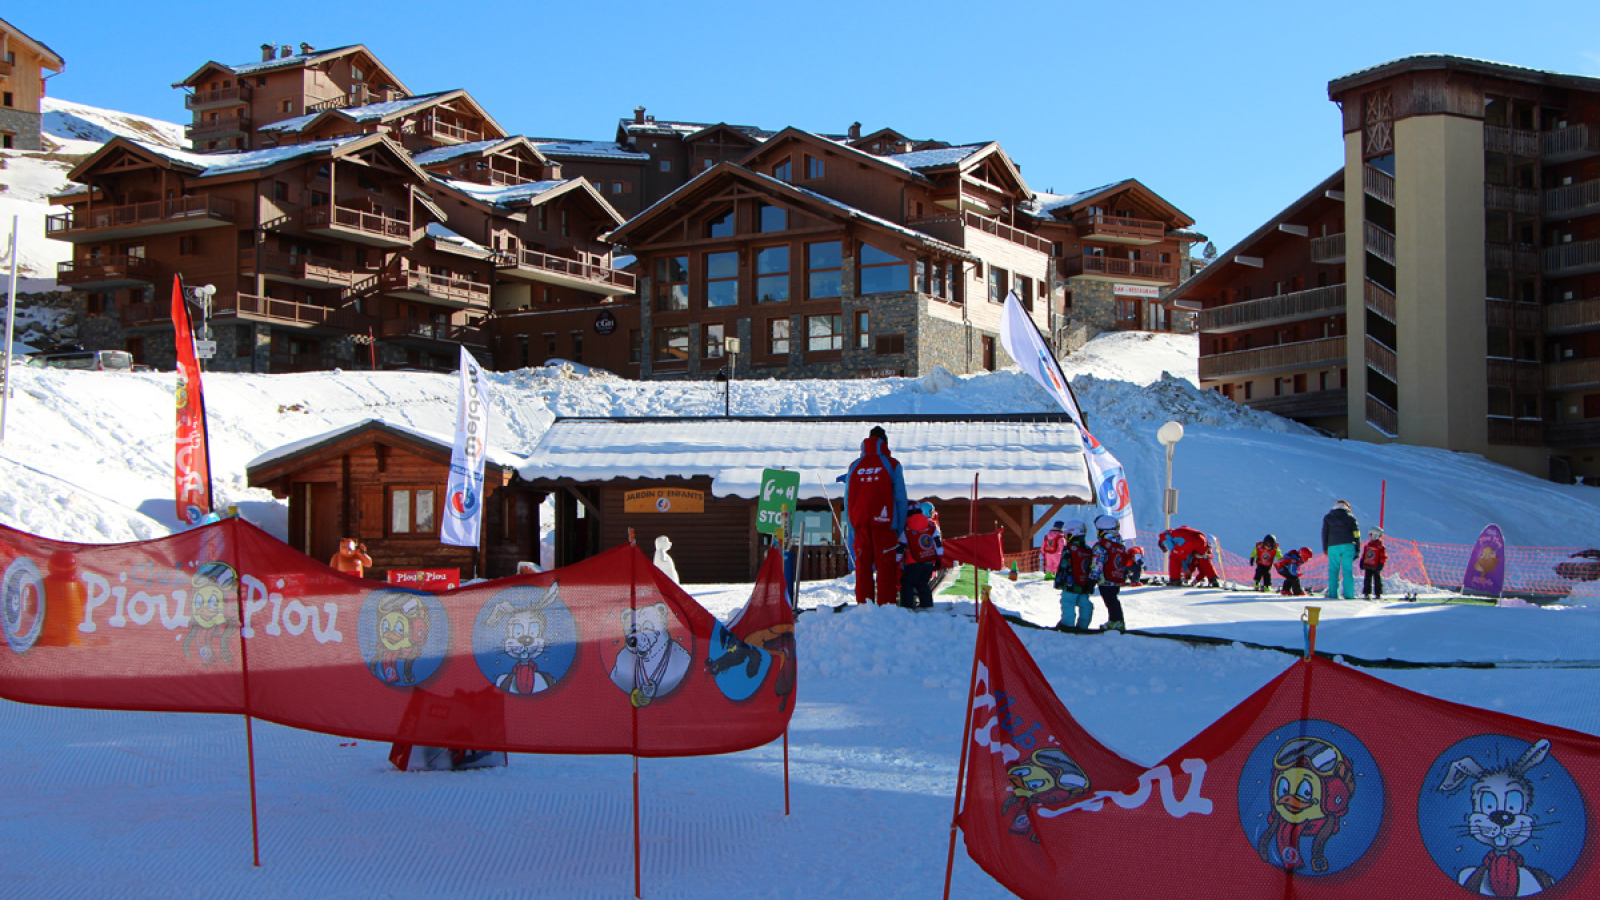 Pioupiou Club Ski School (ESF)